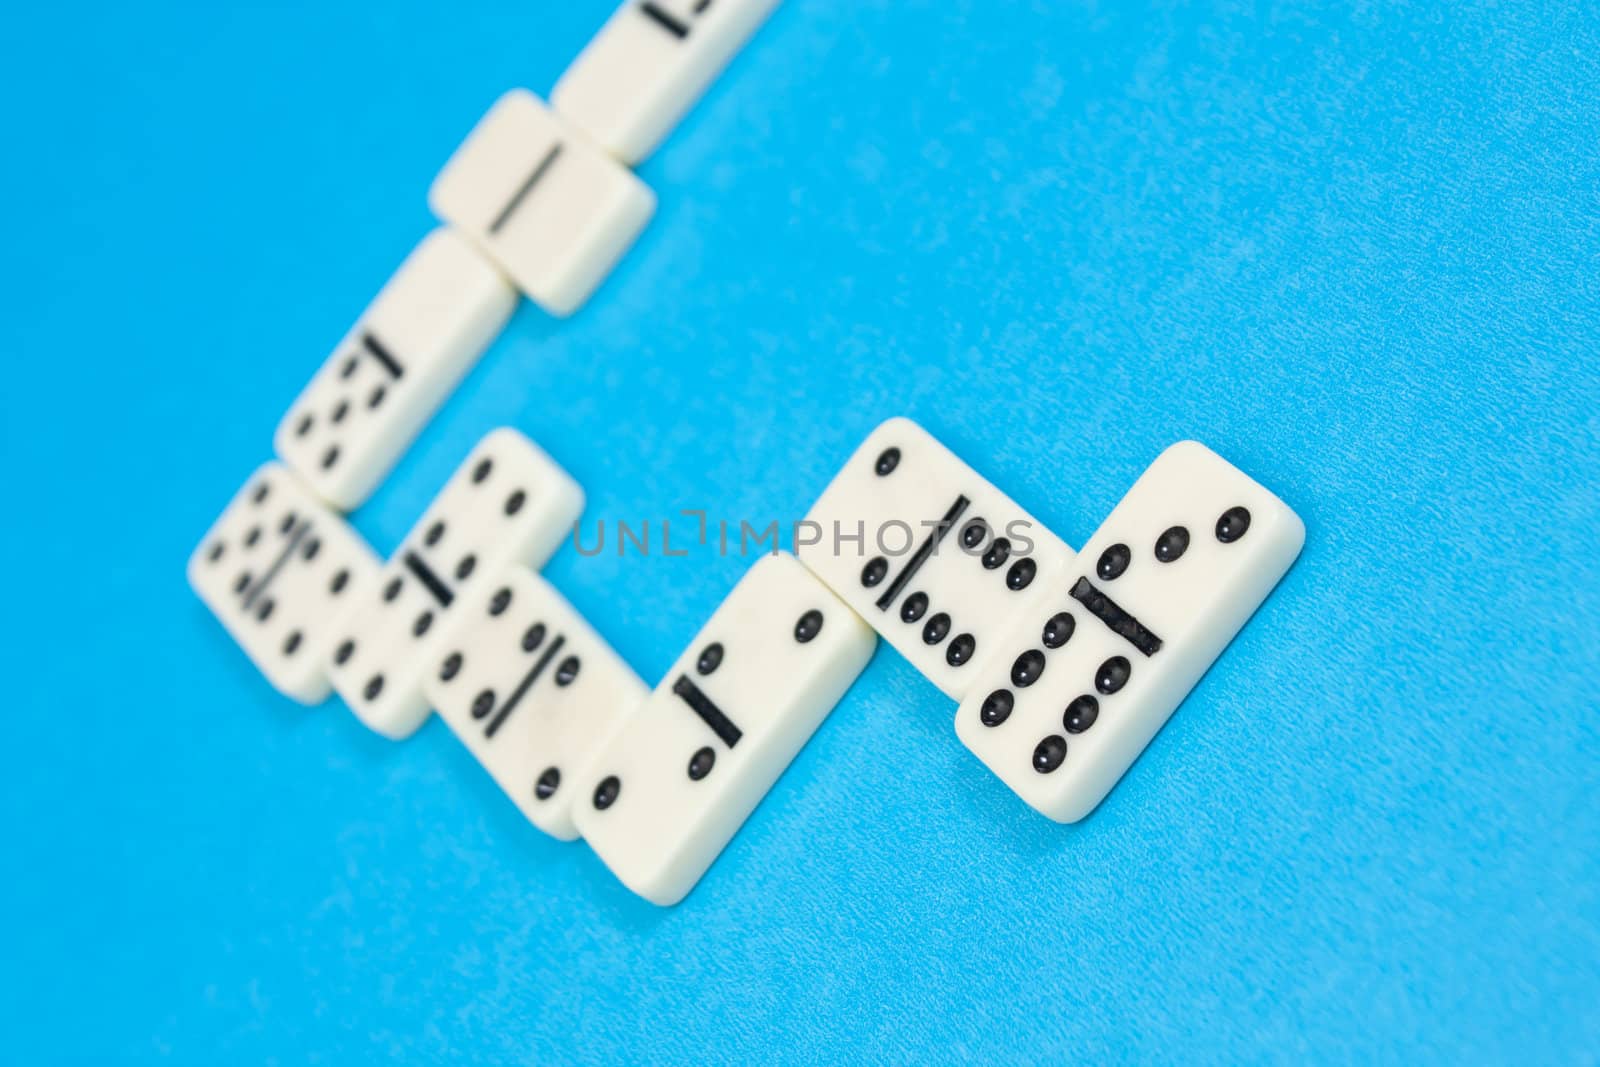 Bricks of domino. Blue and grey series by aleksan